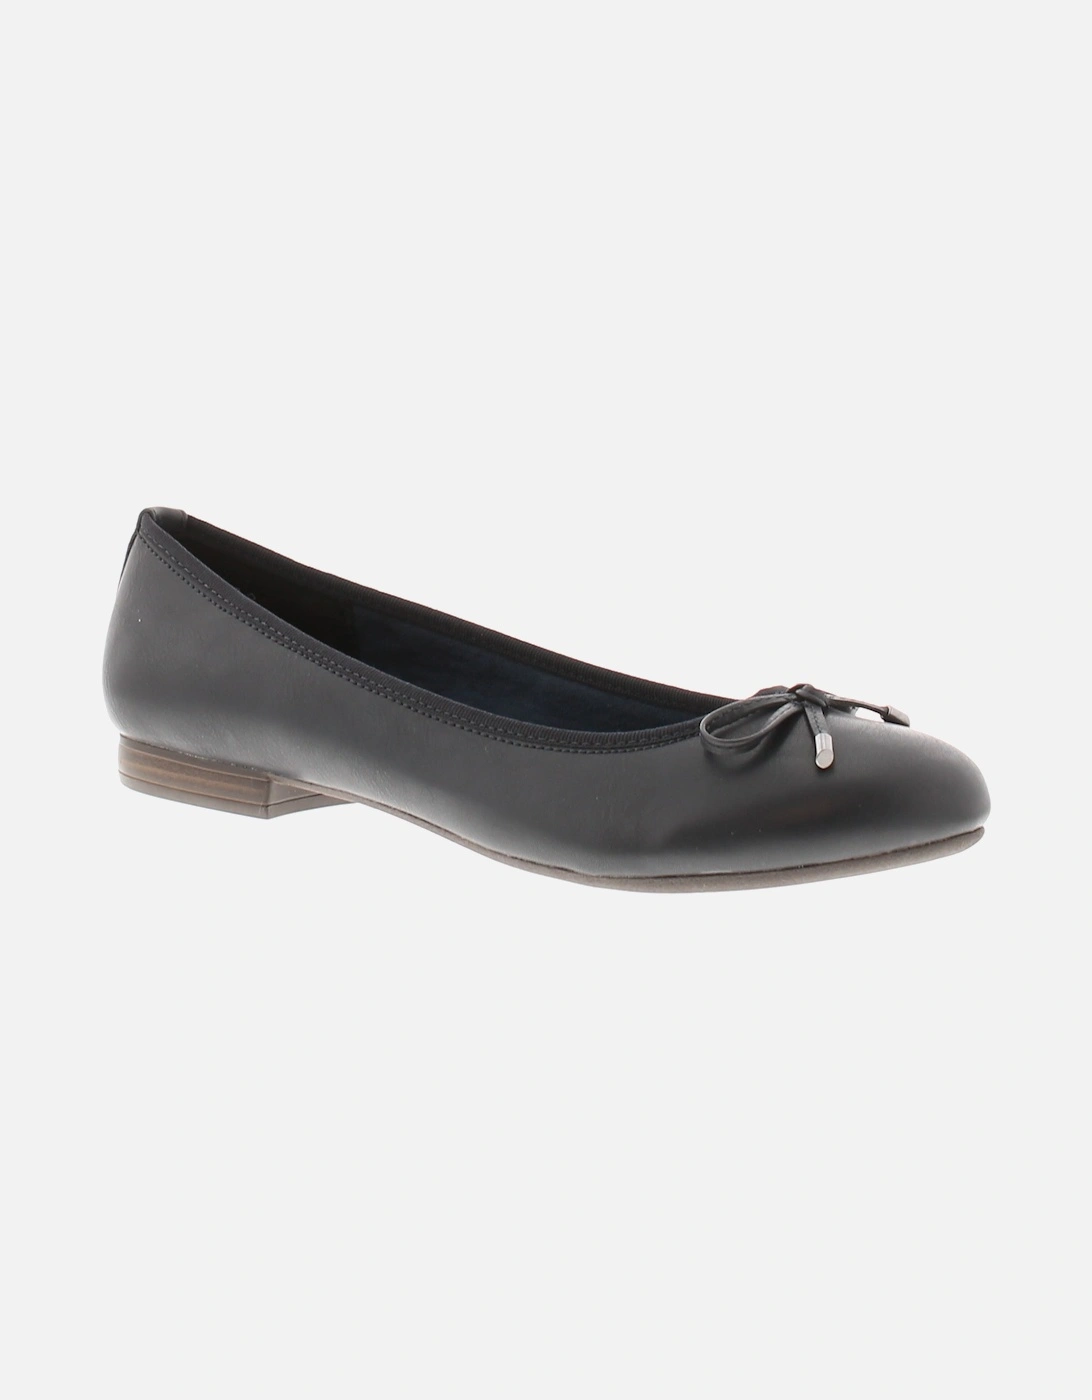 Womens Shoes Flats Ballerina Milana Slip On navy UK Size, 6 of 5